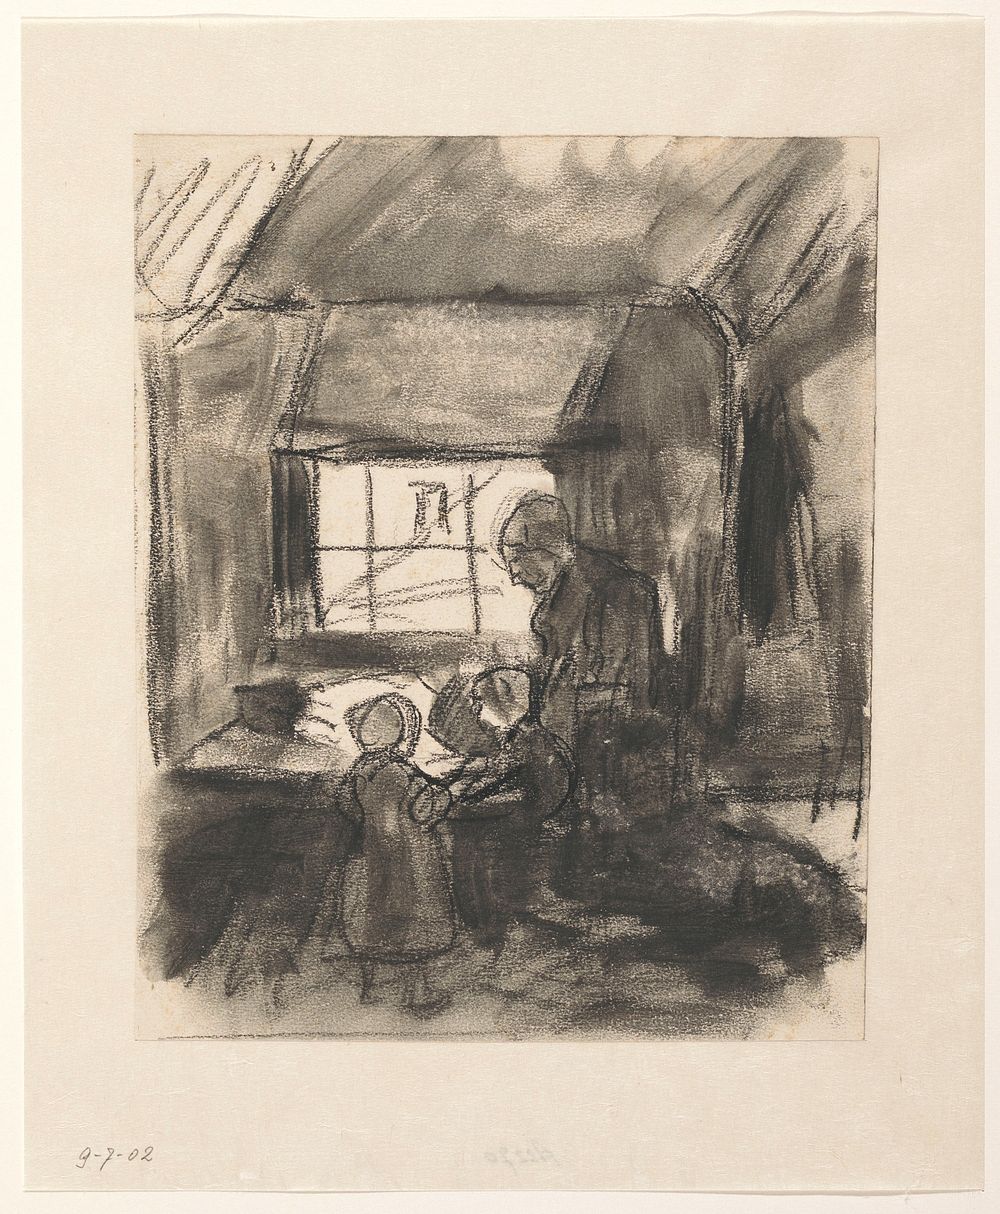 Interieur met vrouw en twee kindertjes (1836 - 1896) by Hendrik Valkenburg